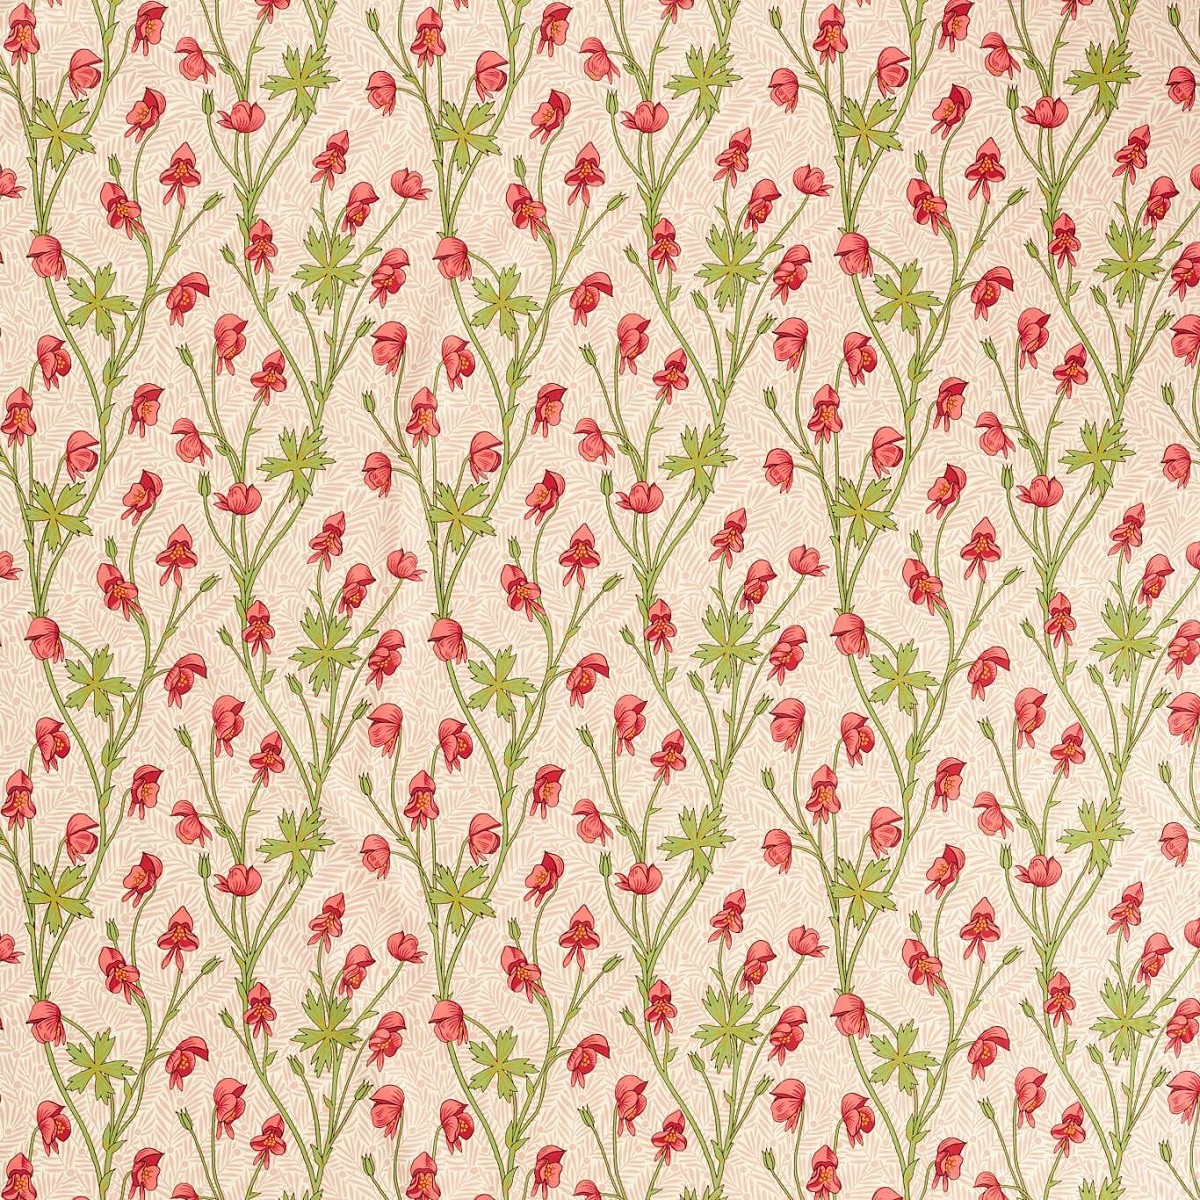 Monkshood Rhubarb Fabric by William Morris & Co.